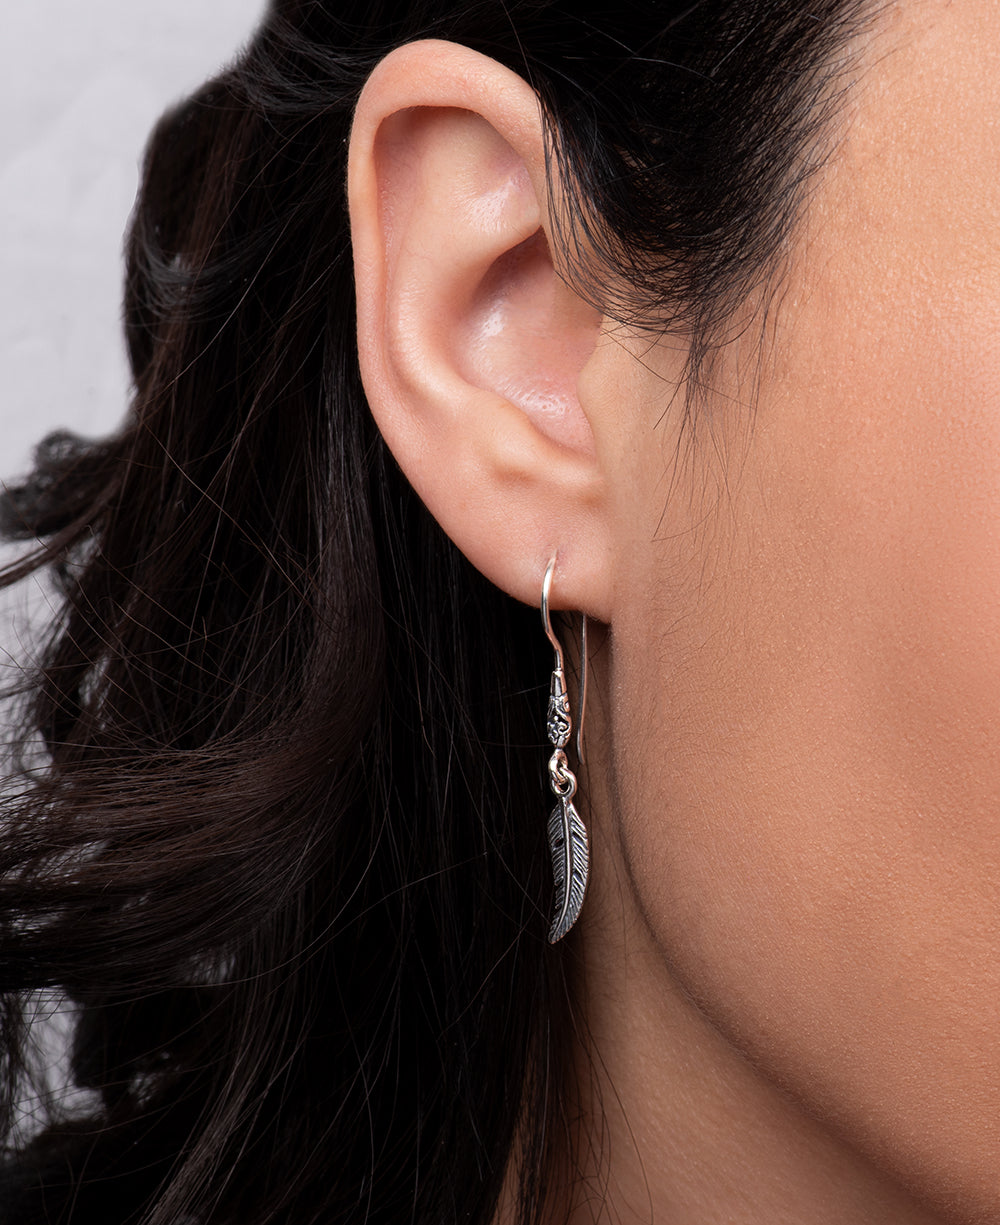 Lightweight feather design earrings